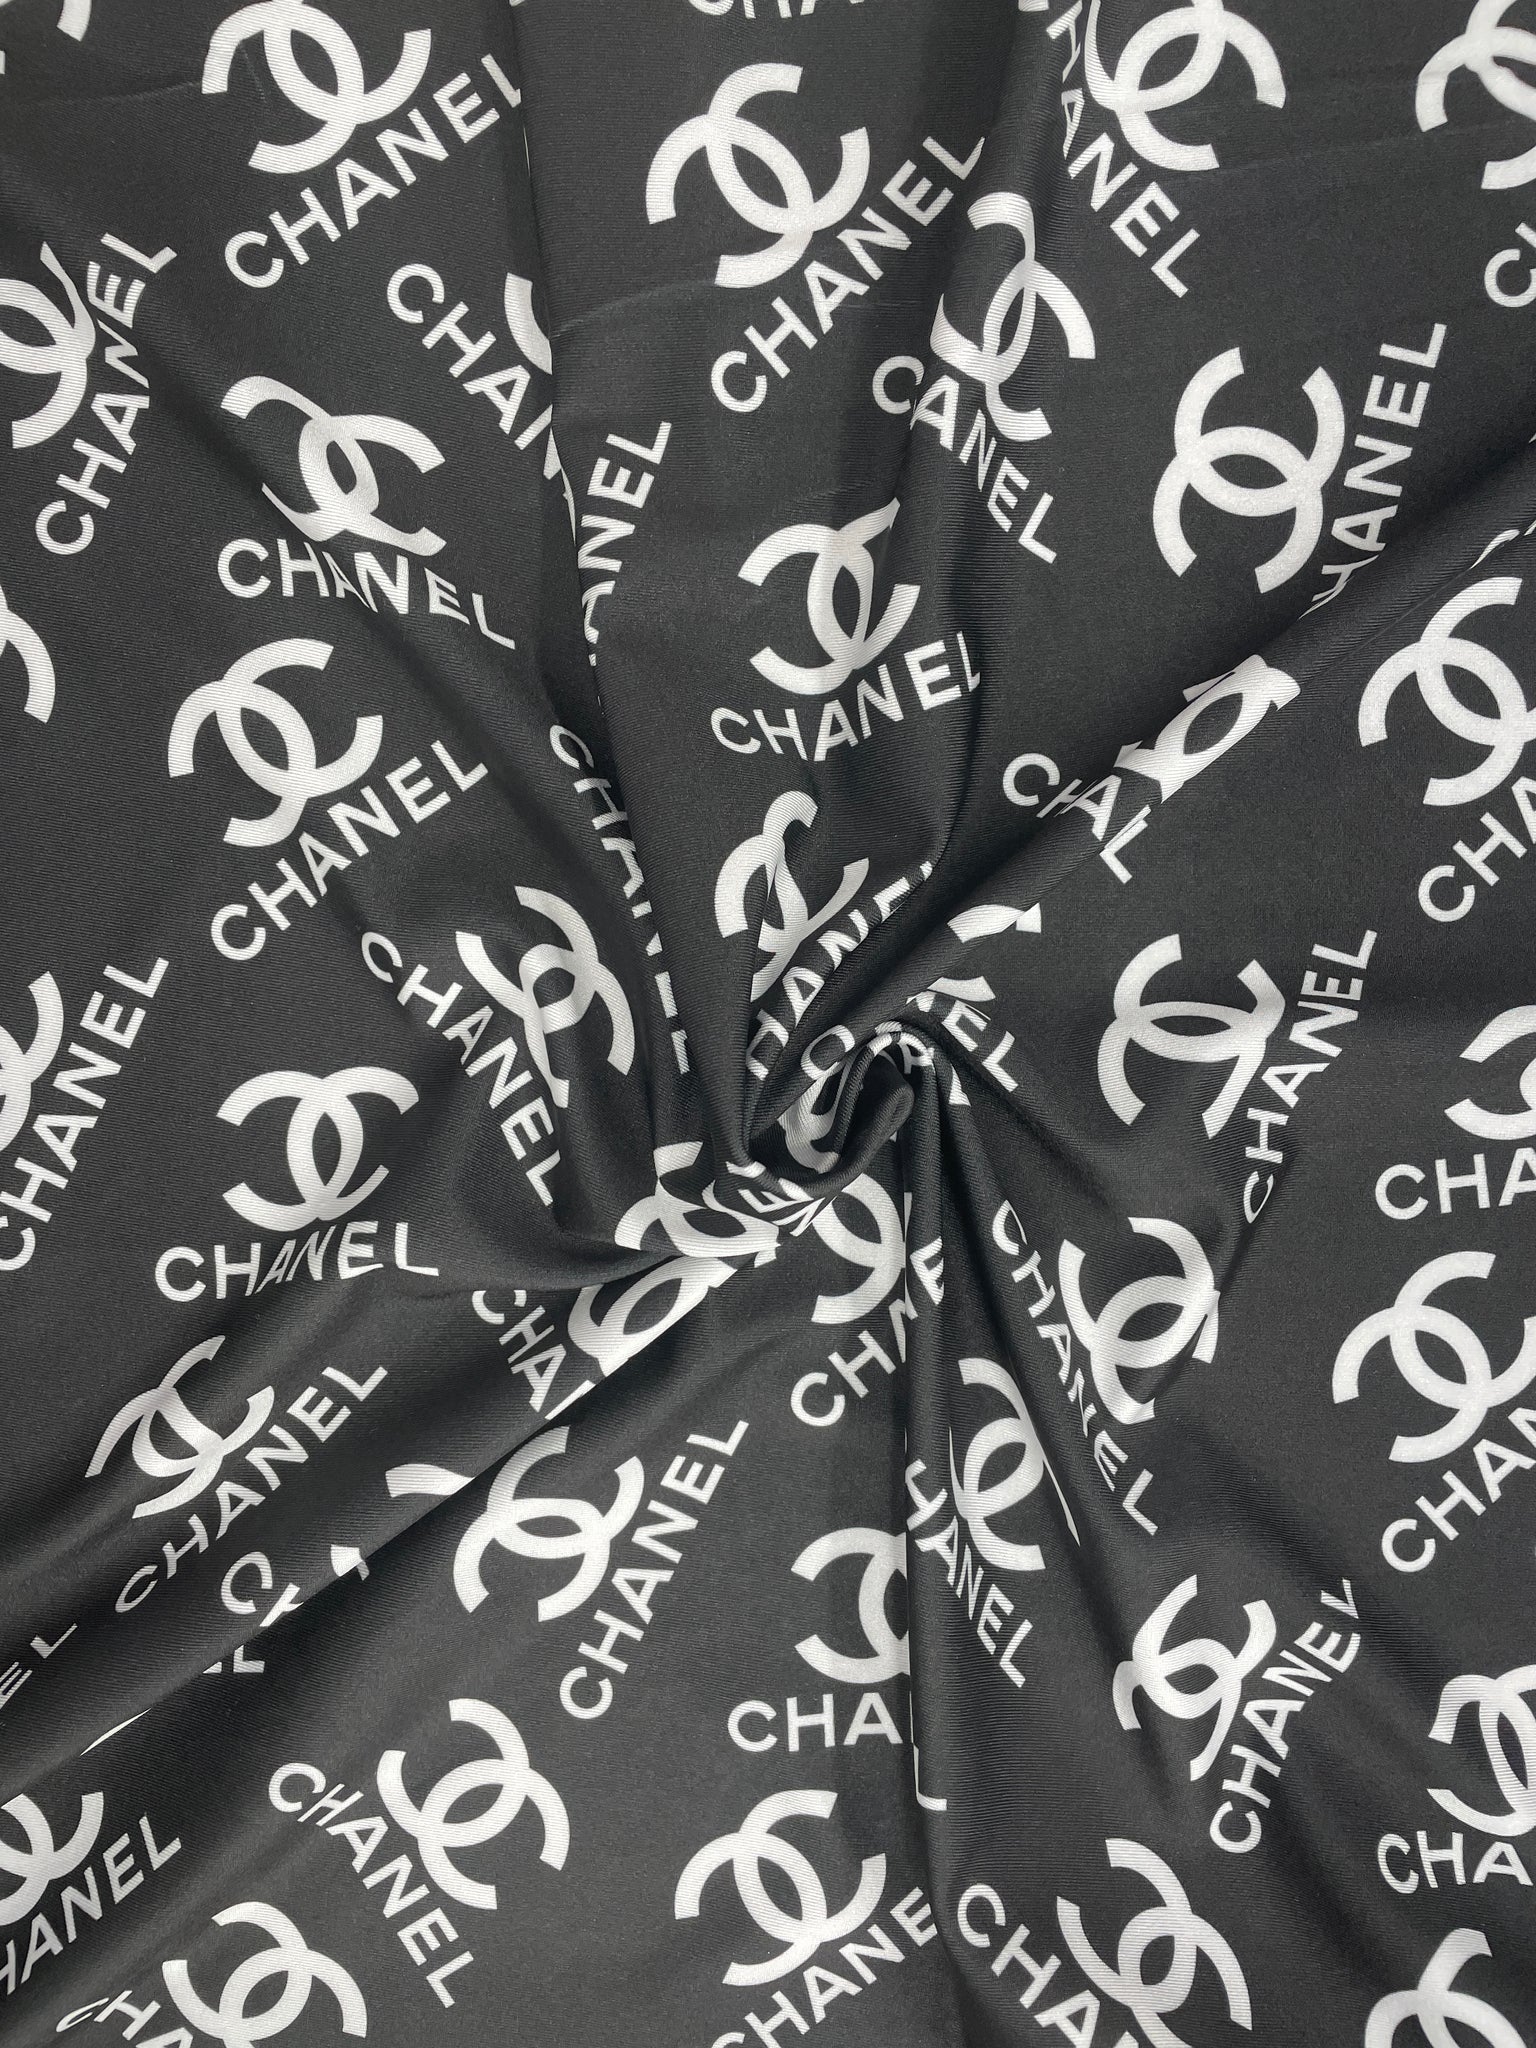 Chanel Design Logo Print on Solid Color Spandex